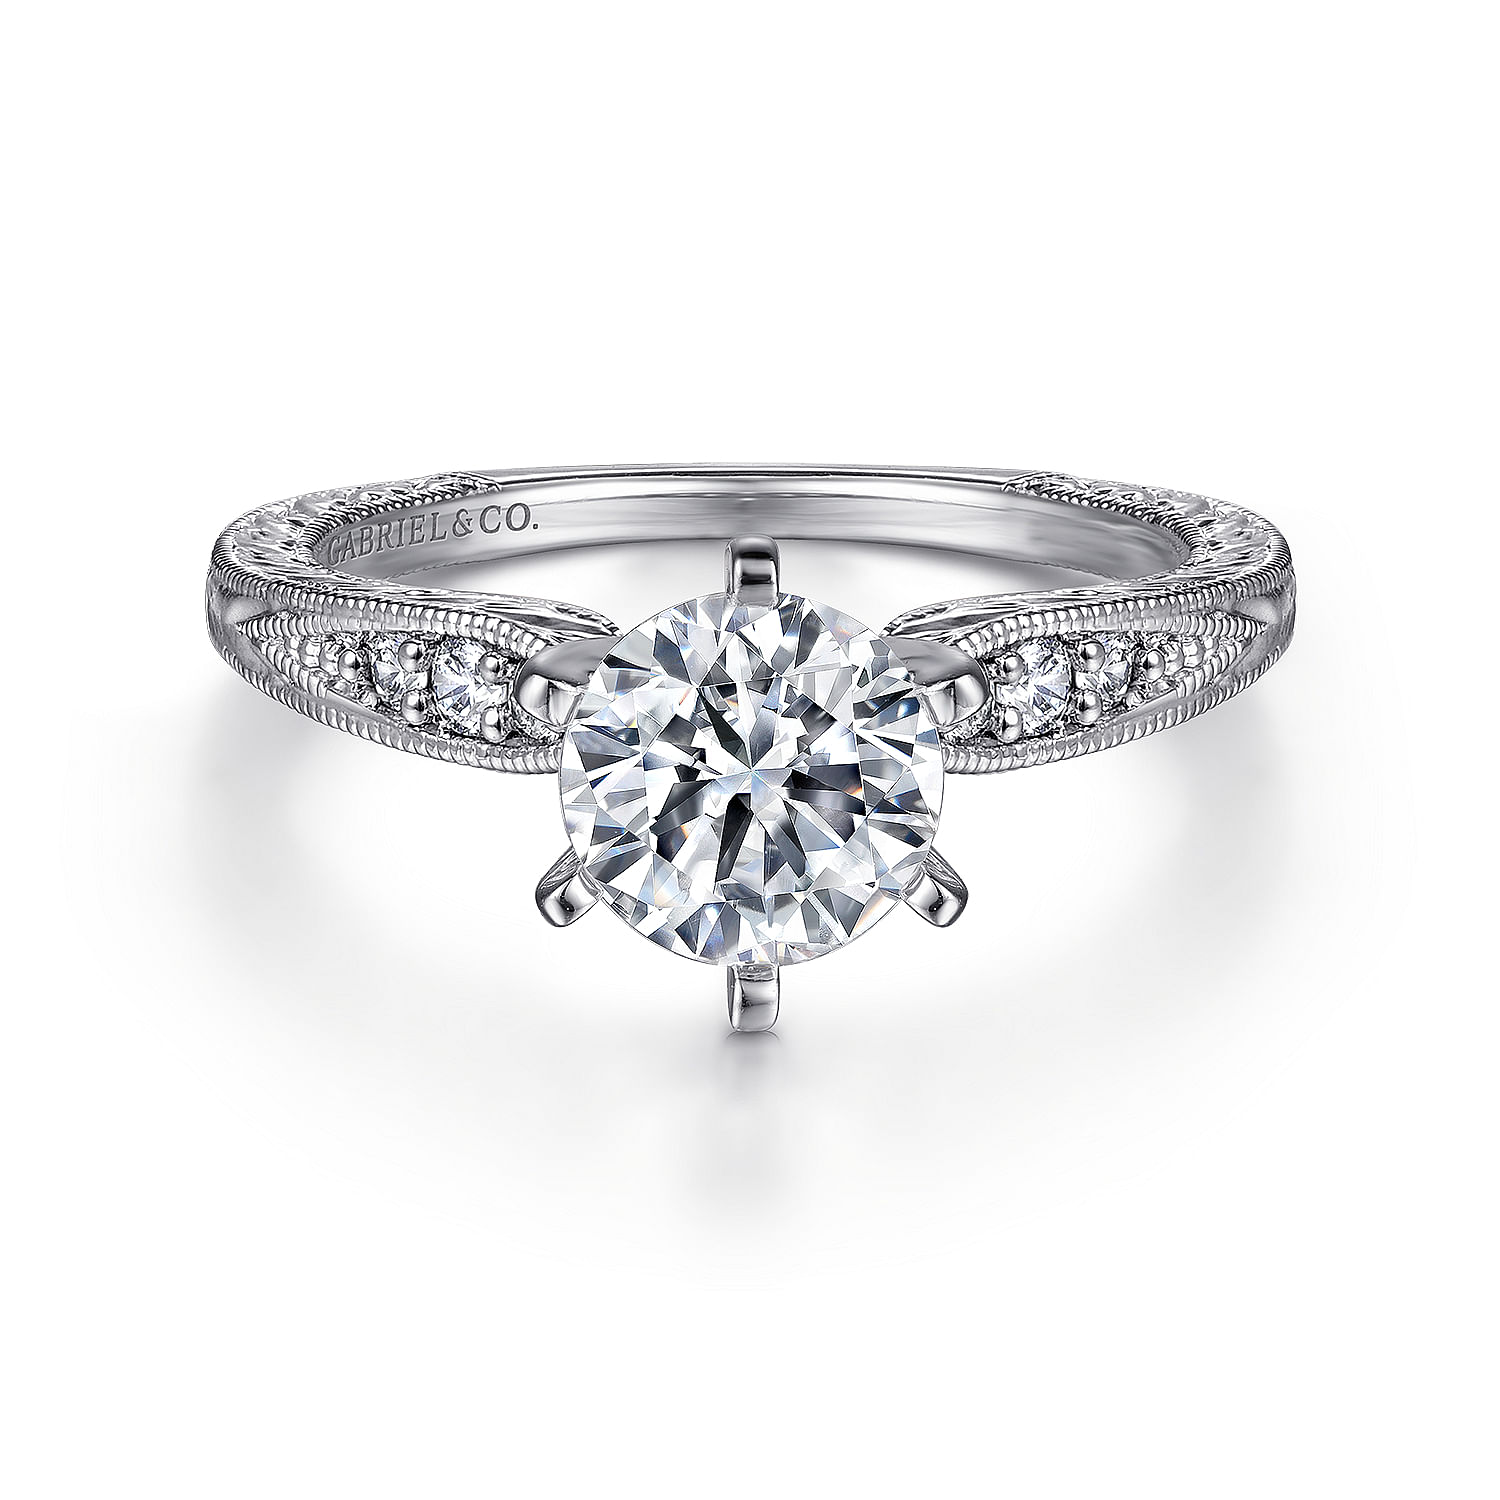 Kate---14K-White-Gold-Round-Diamond-Engagement-Ring1